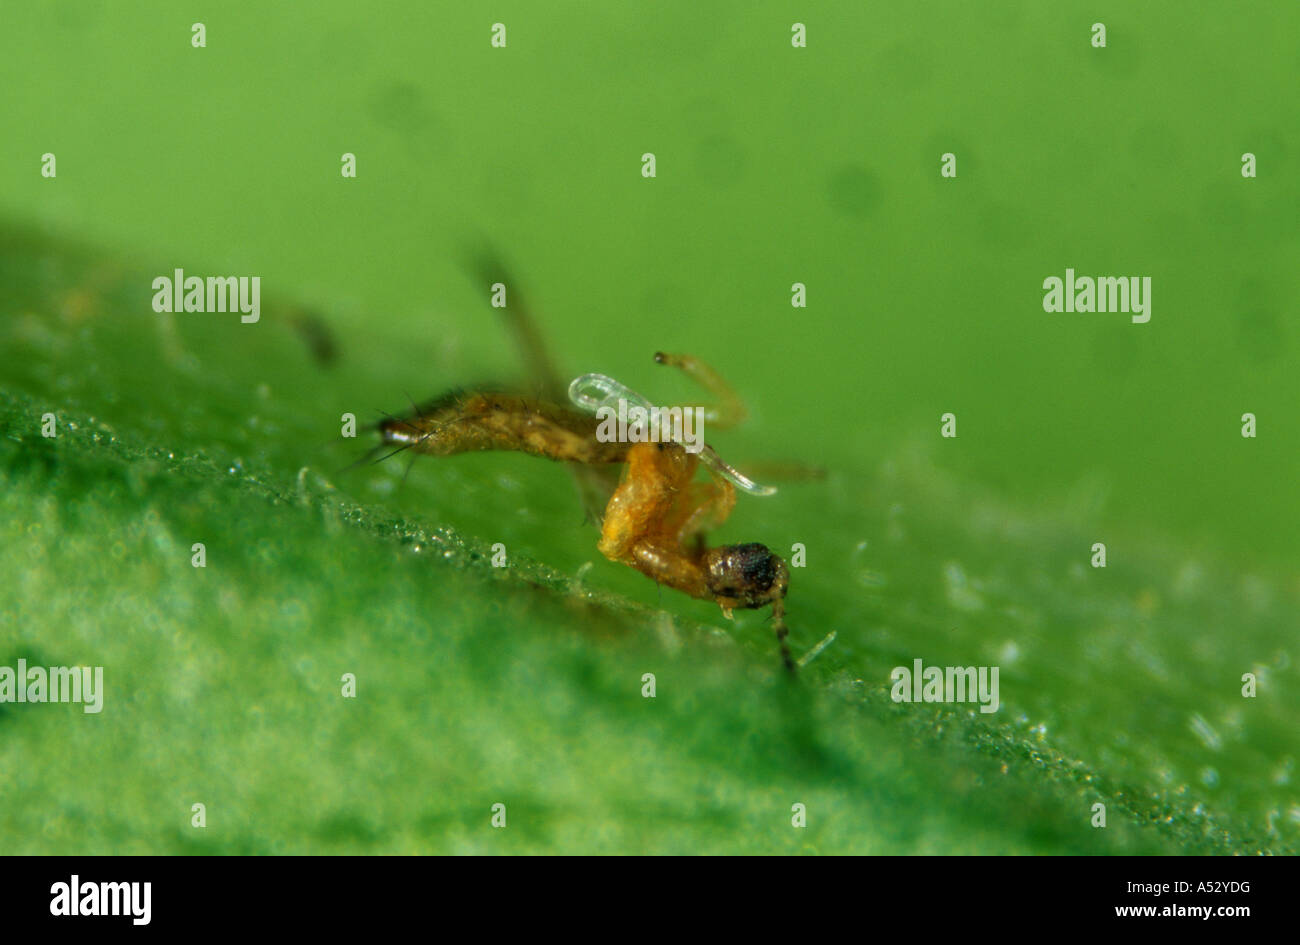 https://c8.alamy.com/comp/A52YDG/western-flower-thrips-killed-by-a-parasitic-nematode-steinernema-feltiae-A52YDG.jpg